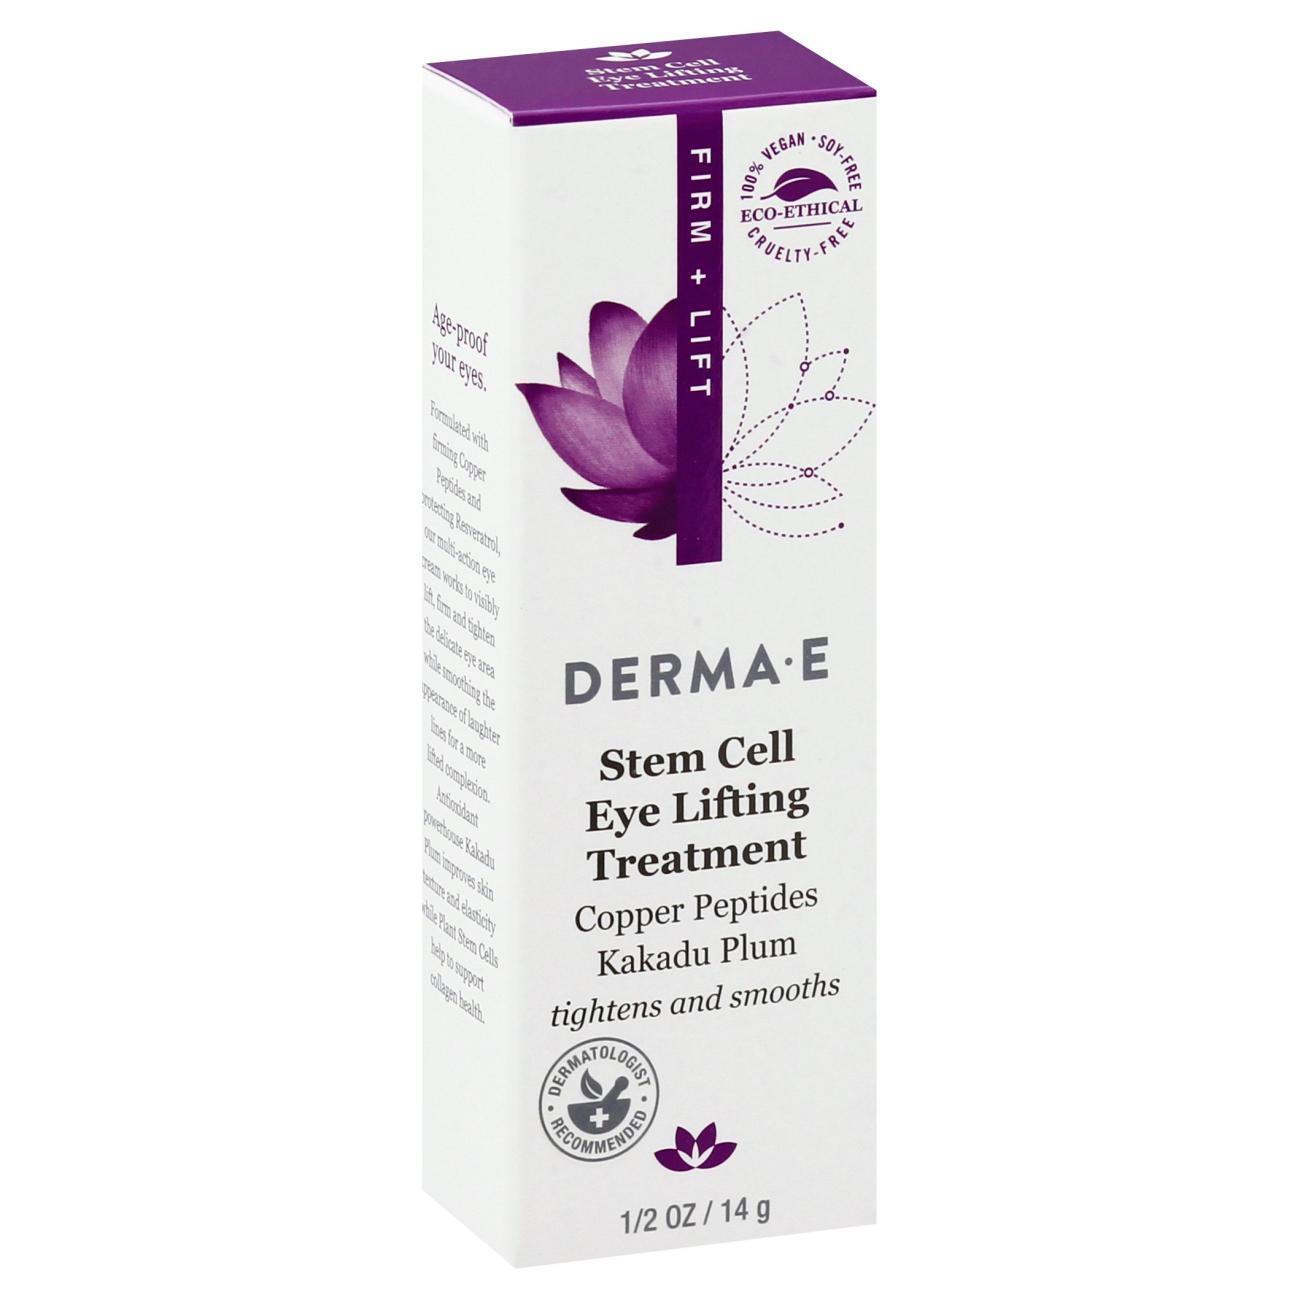 Derma E Stem Cell Eye Lifting Treatment; image 1 of 2